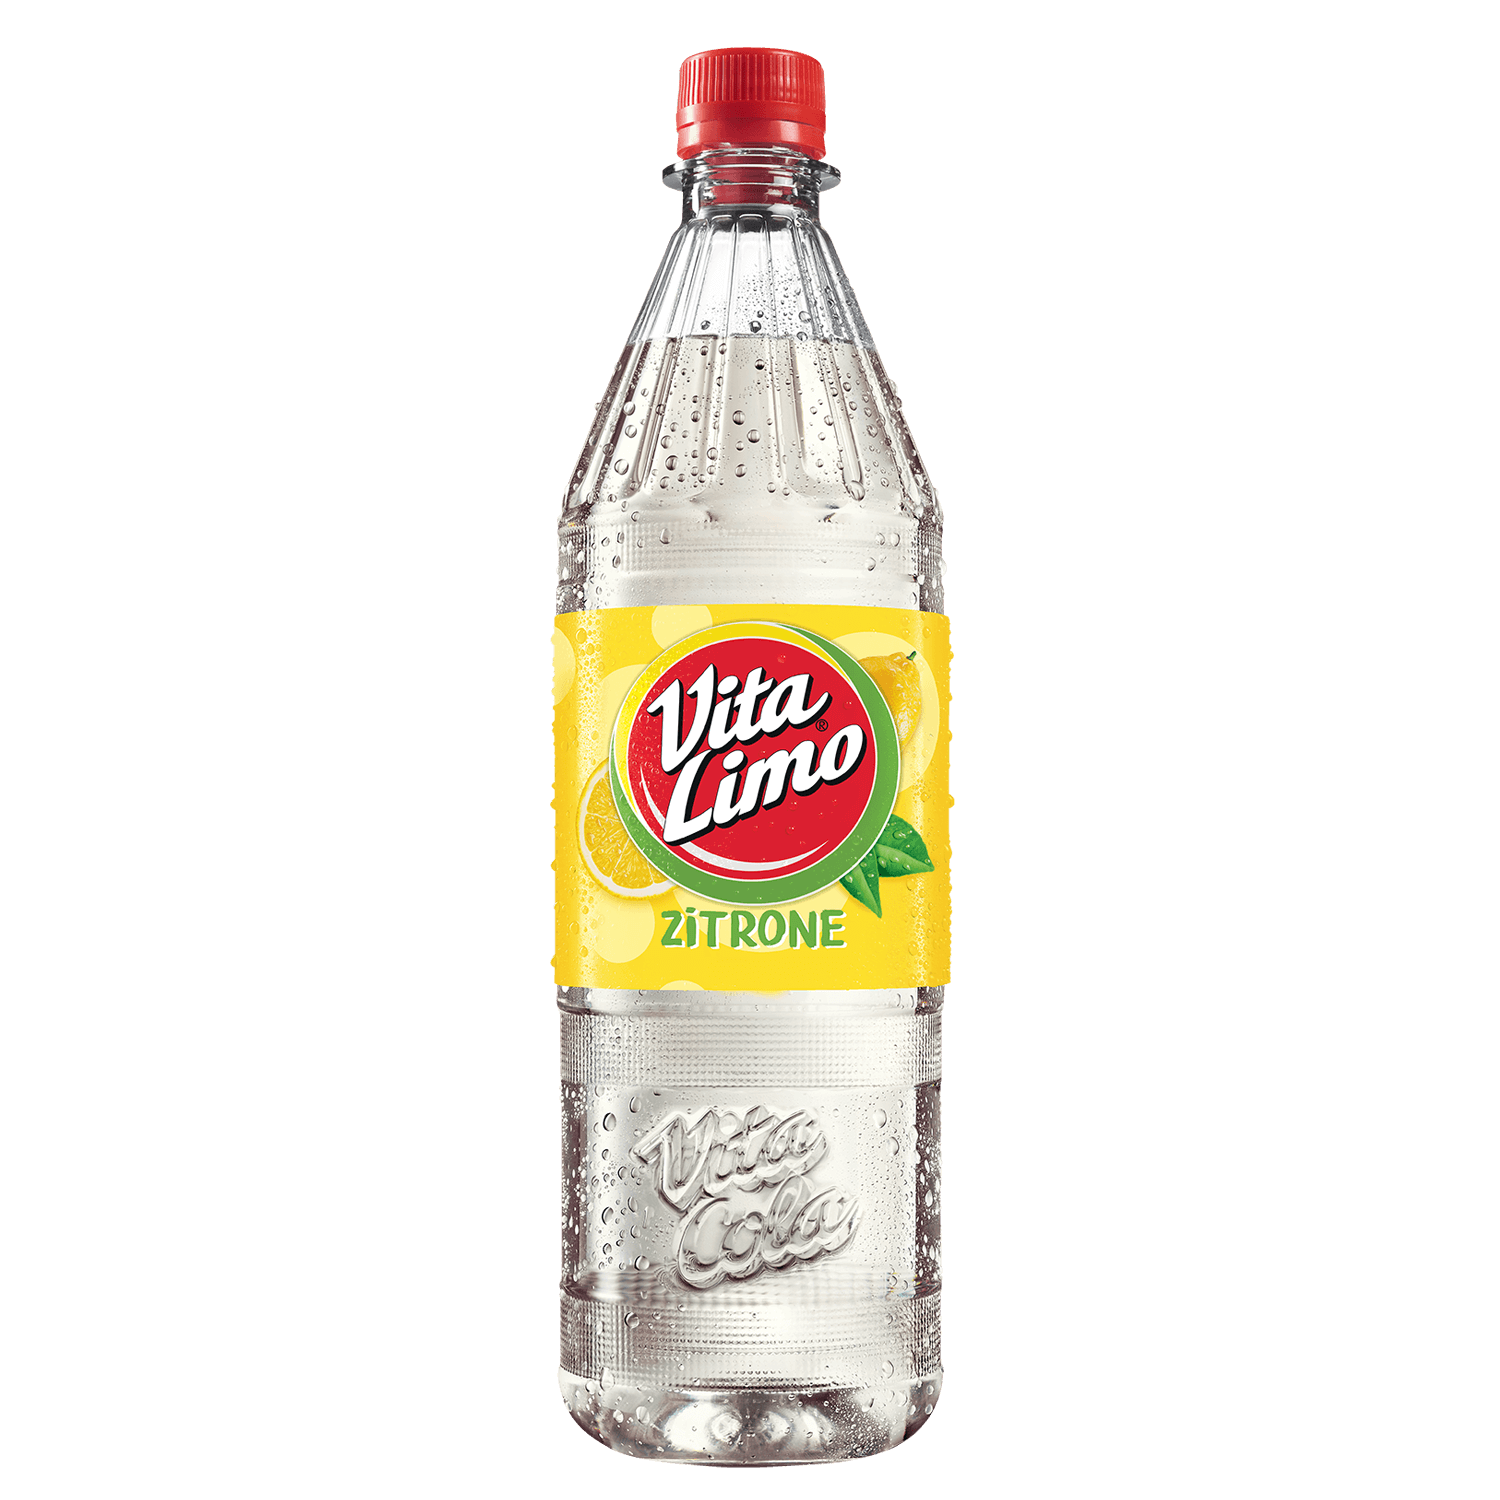 VITA LIMO Zitrone 1 l PET-MEHRWEG-Flasche